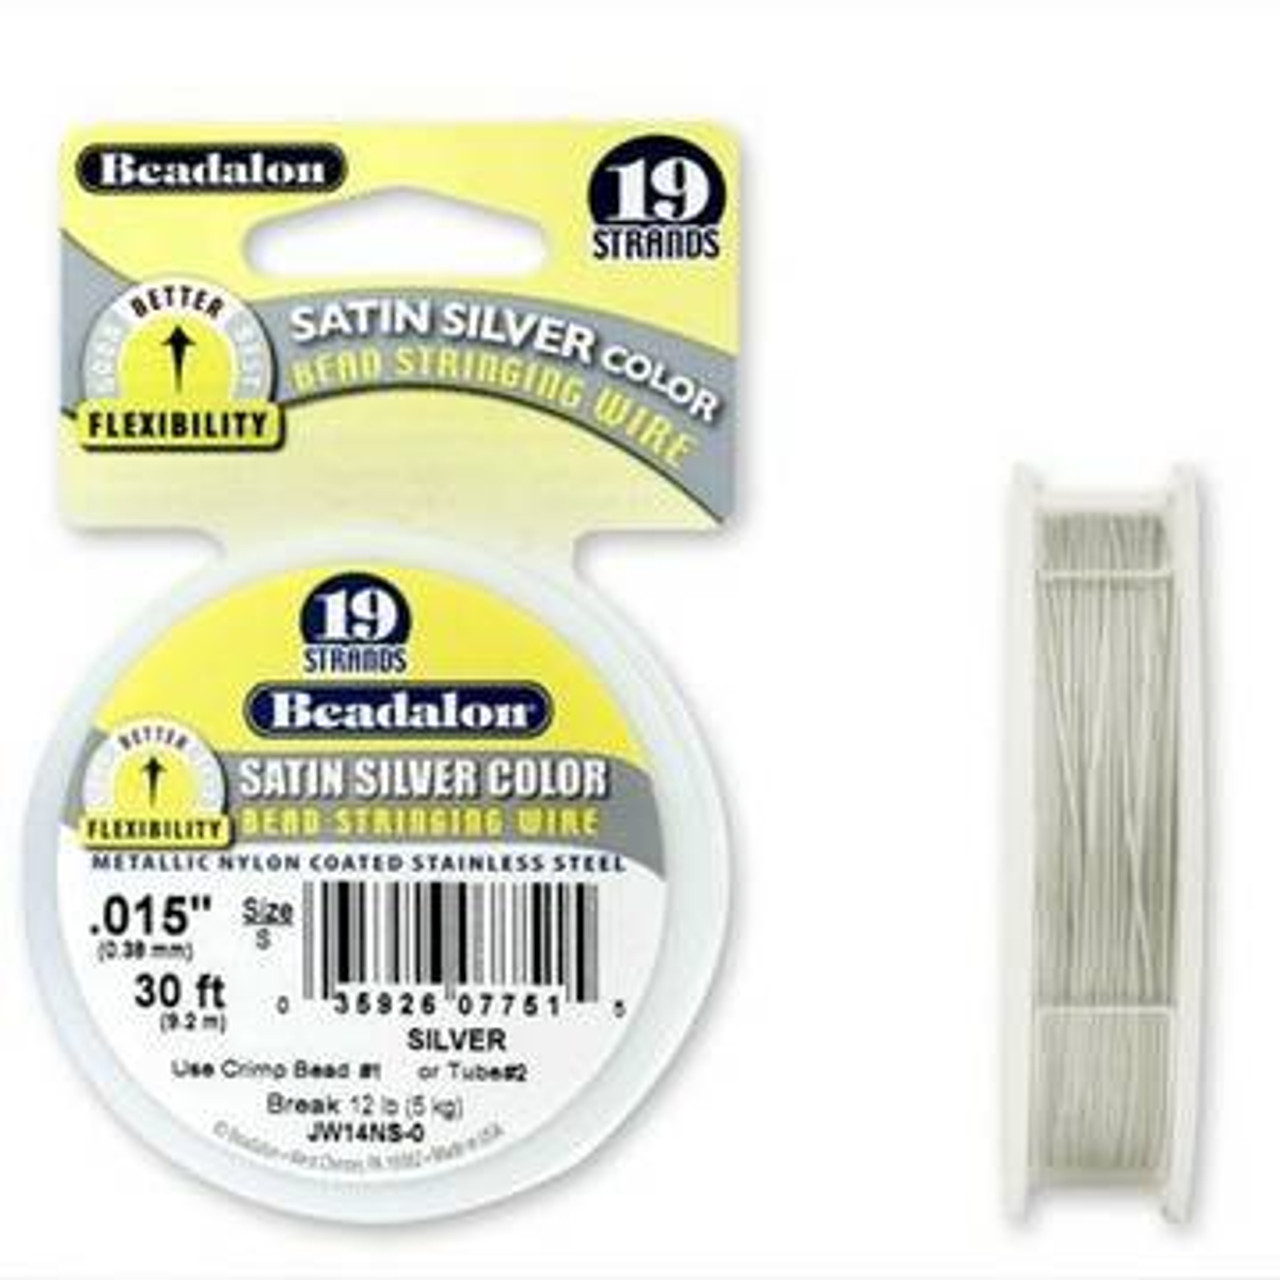 Beadalon 19 Bead Stringing Wire SATIN SILVER